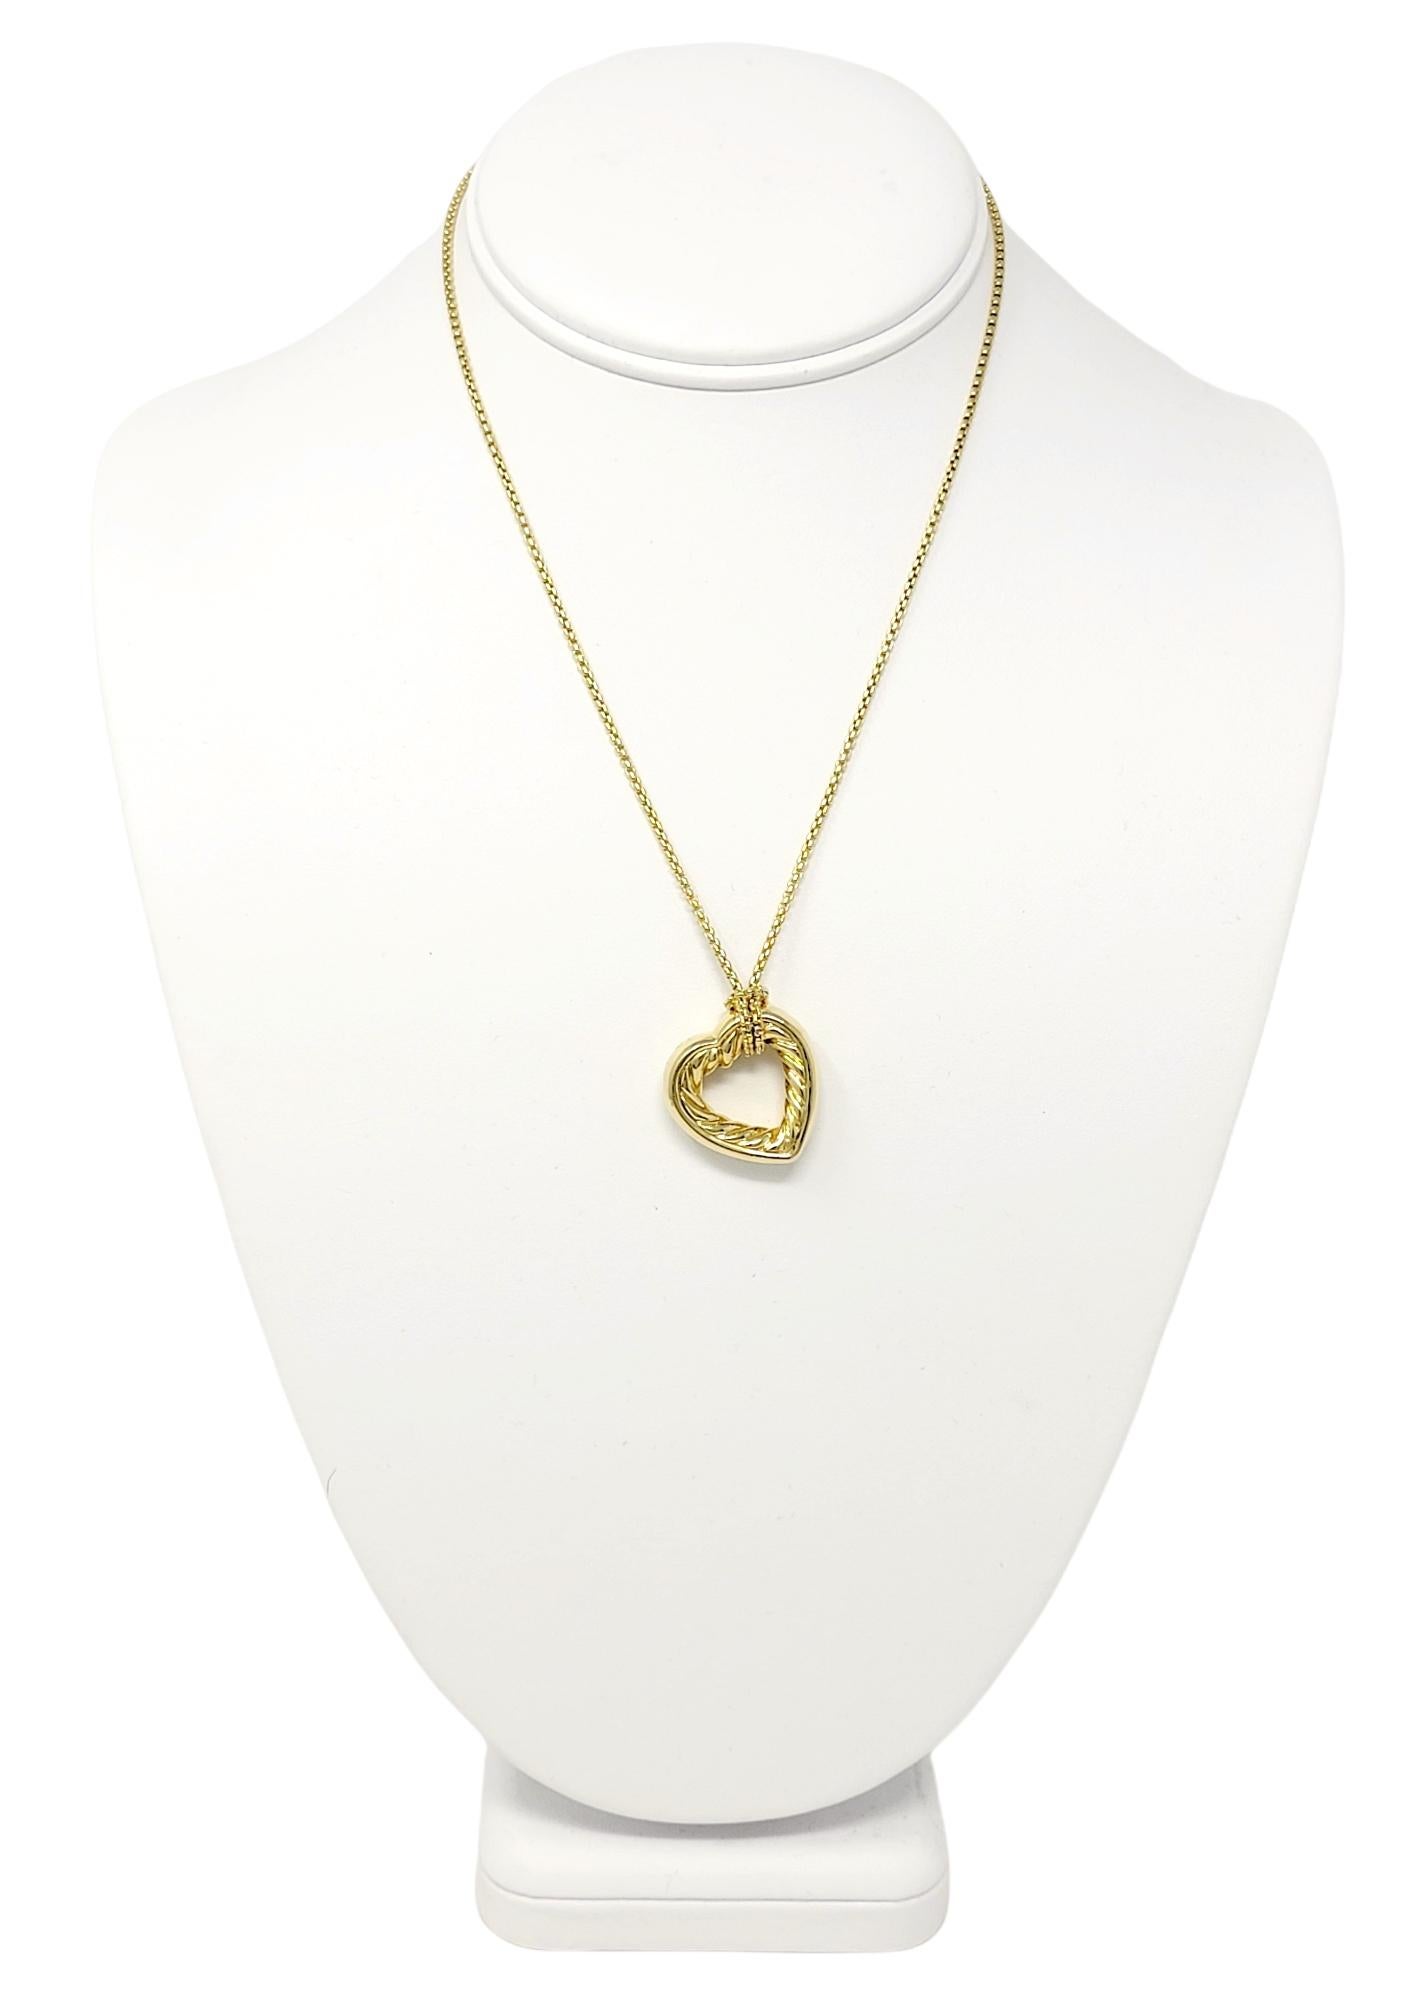 Contemporary David Yurman 18 Karat Yellow Gold Open Heart Cable Pendant Necklace Box Chain For Sale